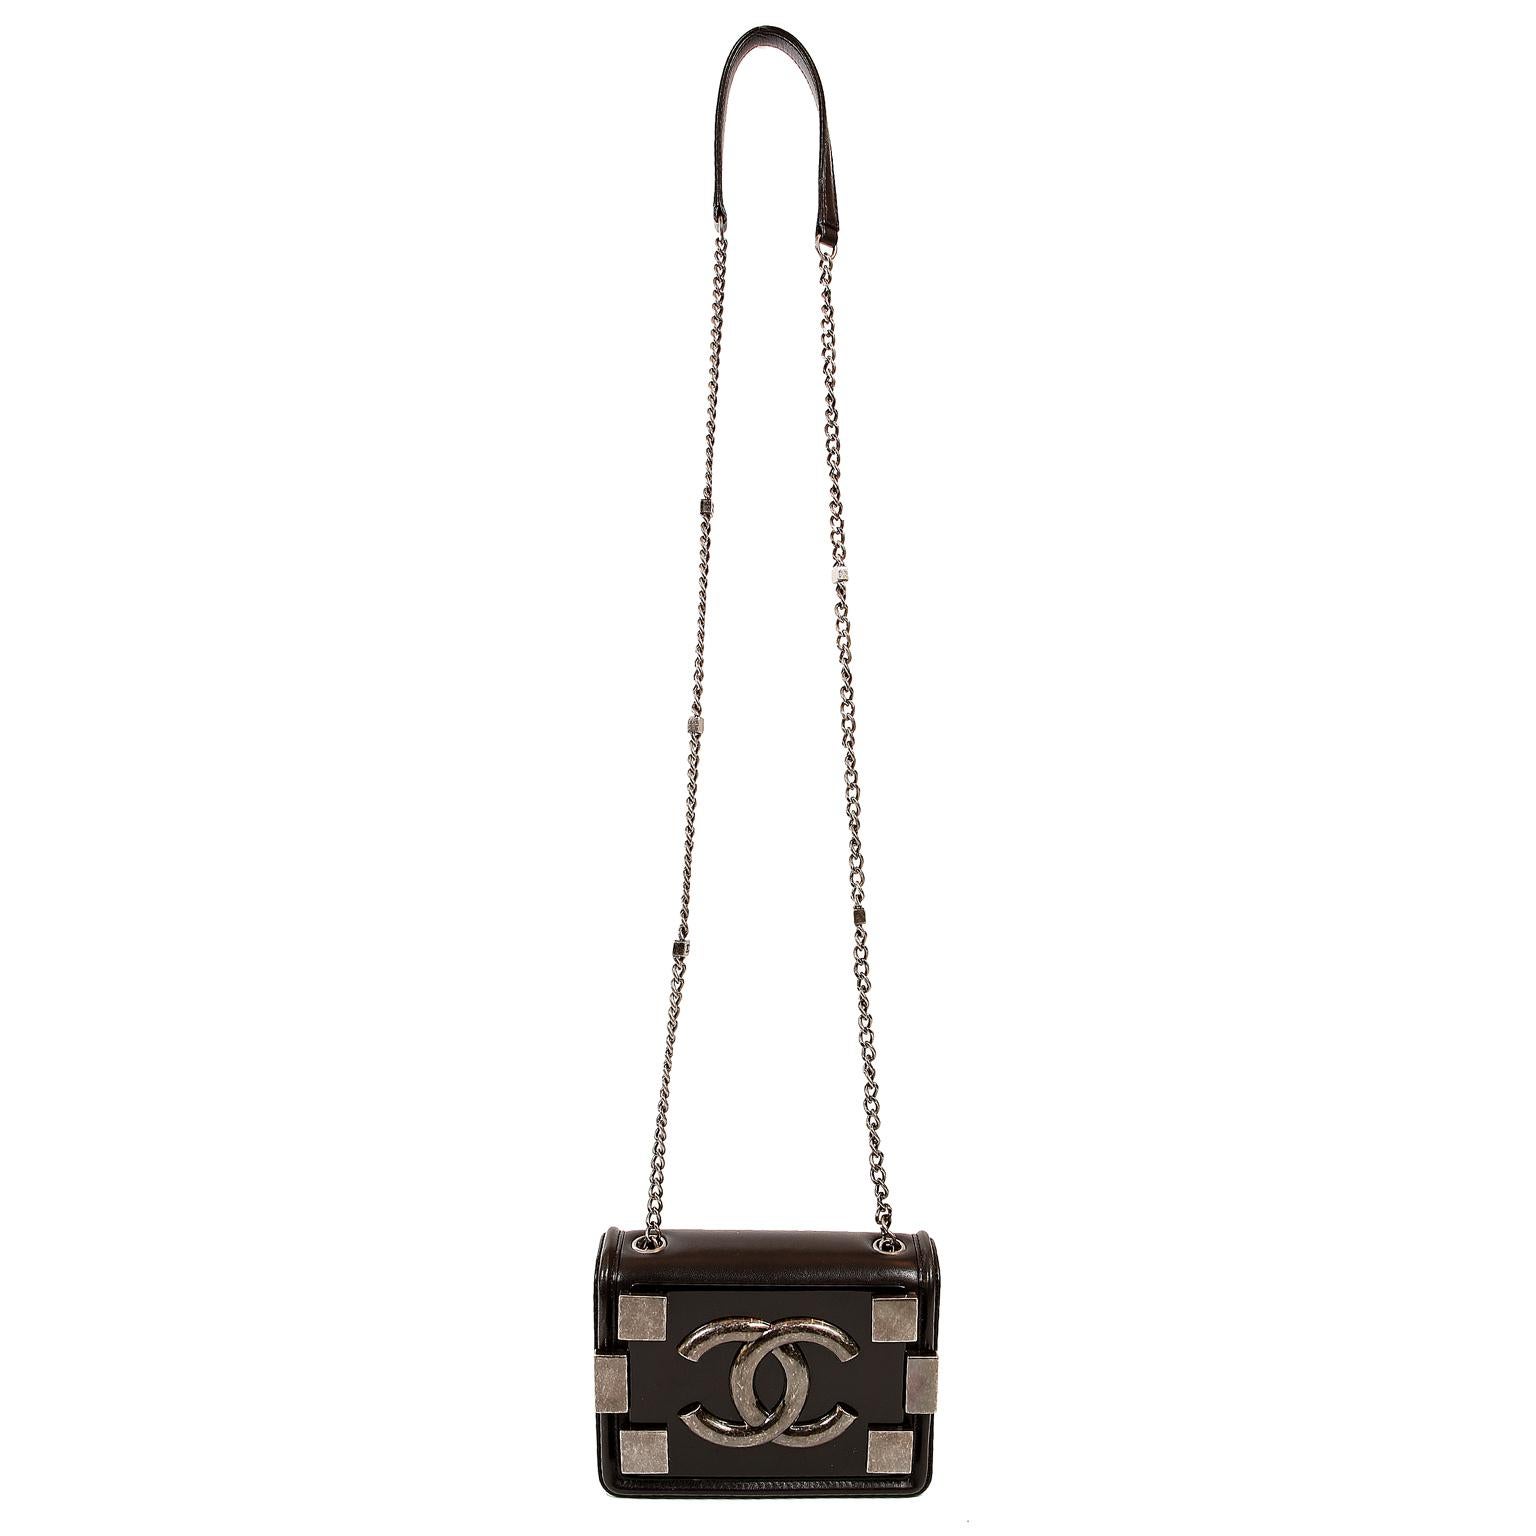 Chanel Boy Brick Cross Body Bag in Black 7